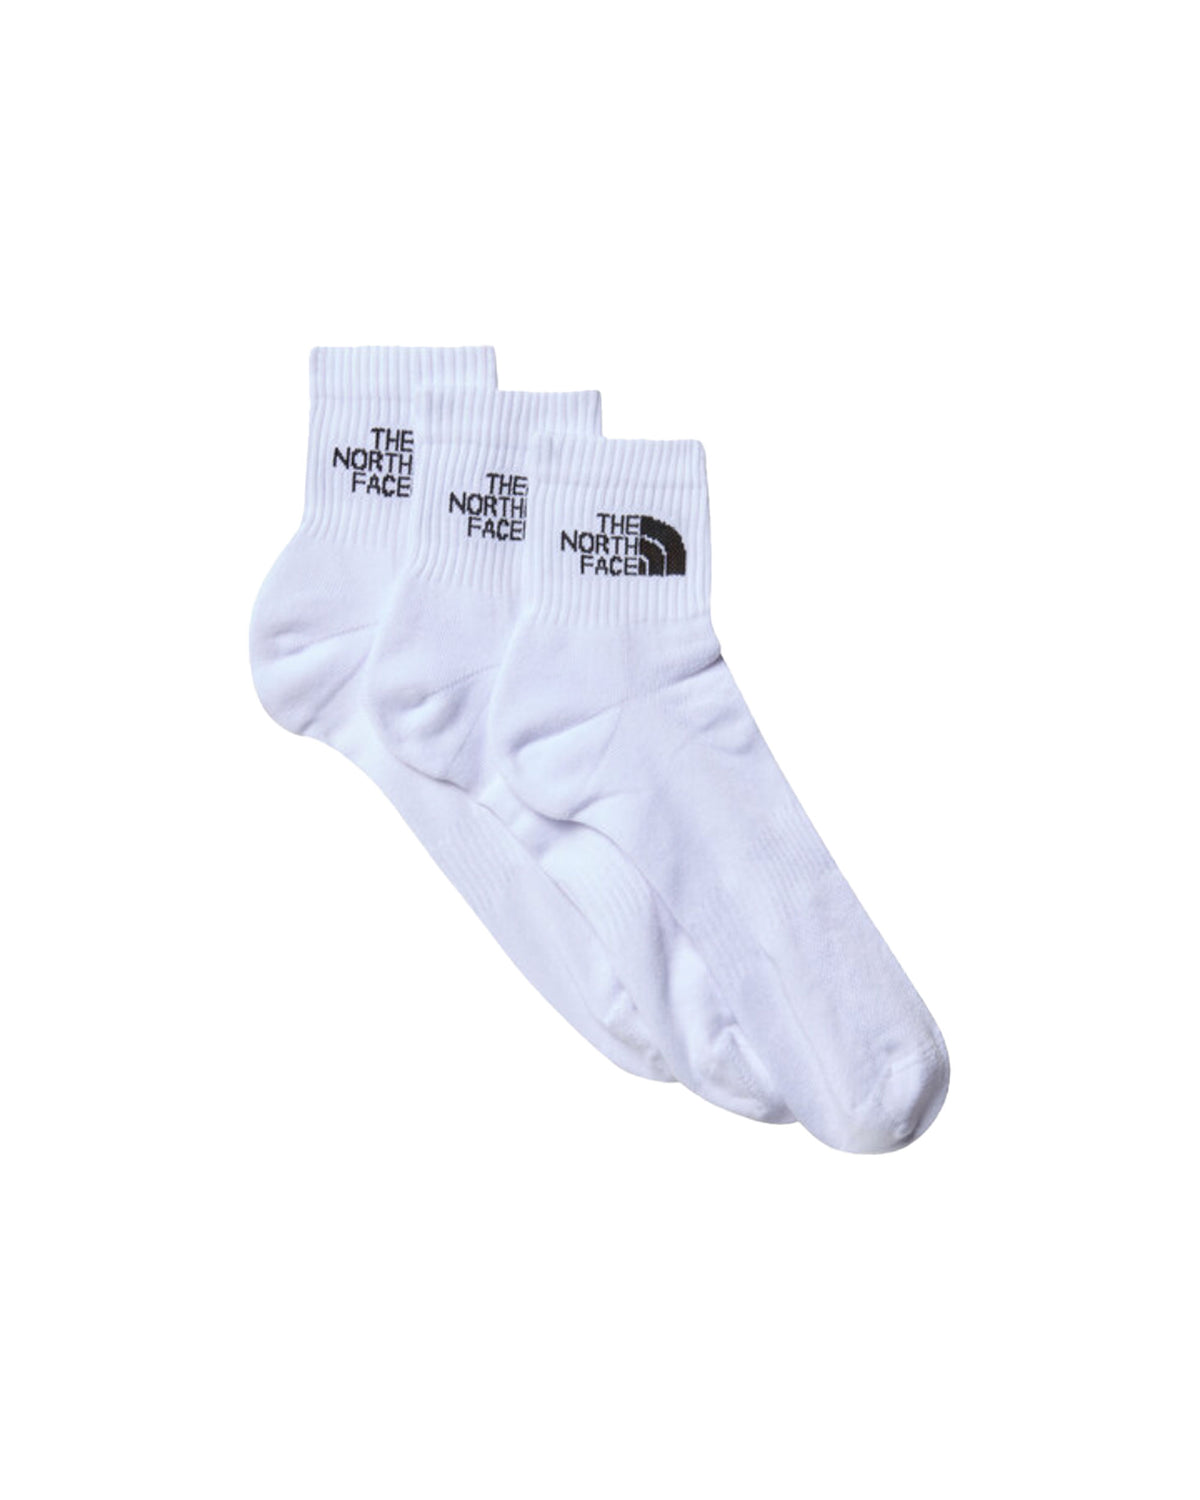 The North Face Multi-Sport Cushion Socks White